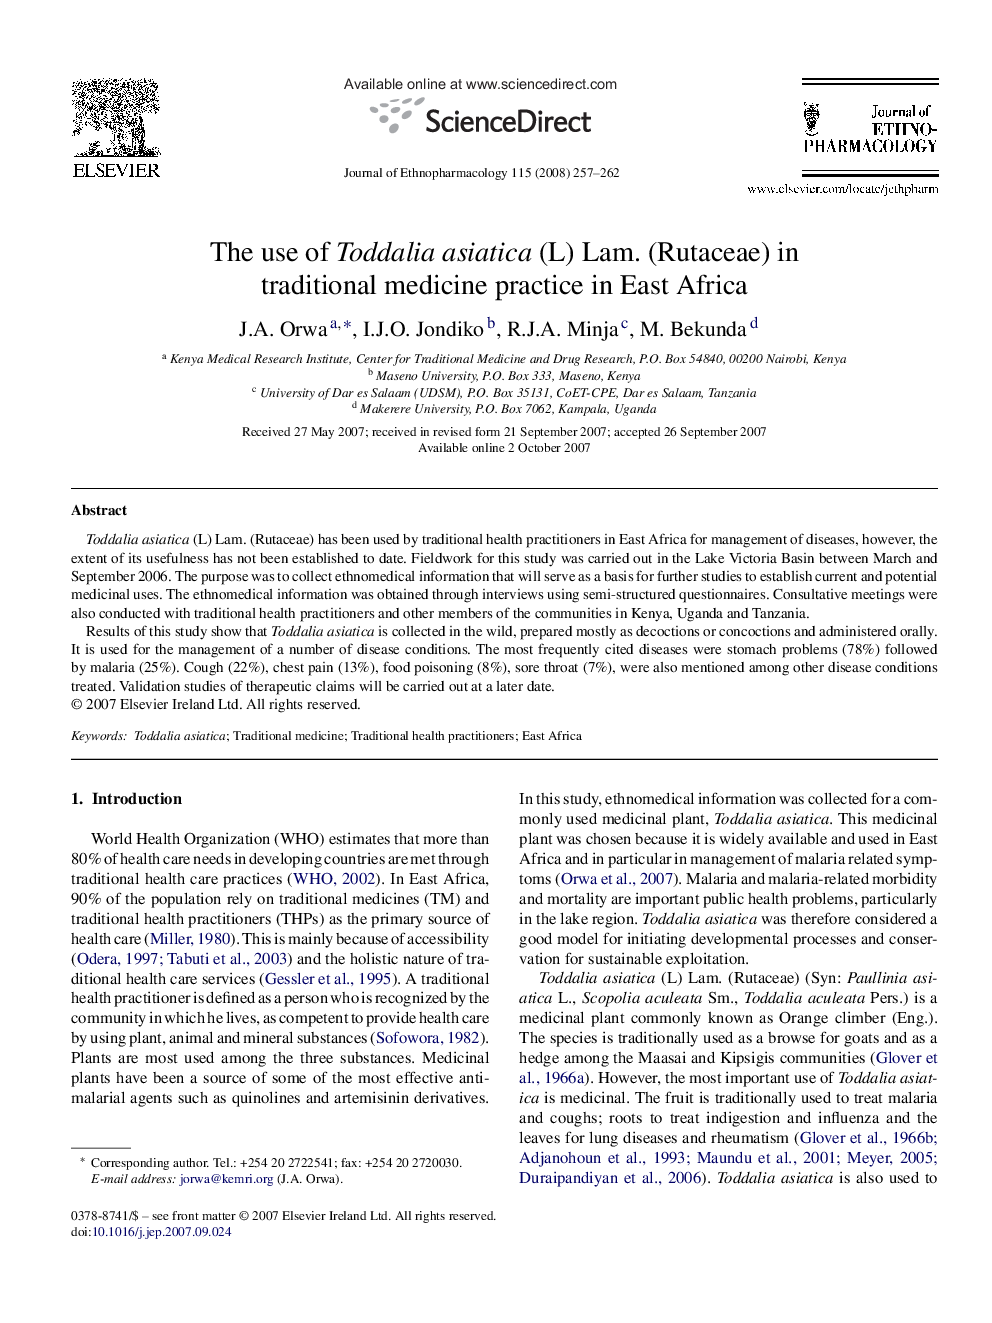 The use of Toddalia asiatica (L) Lam. (Rutaceae) in traditional medicine practice in East Africa